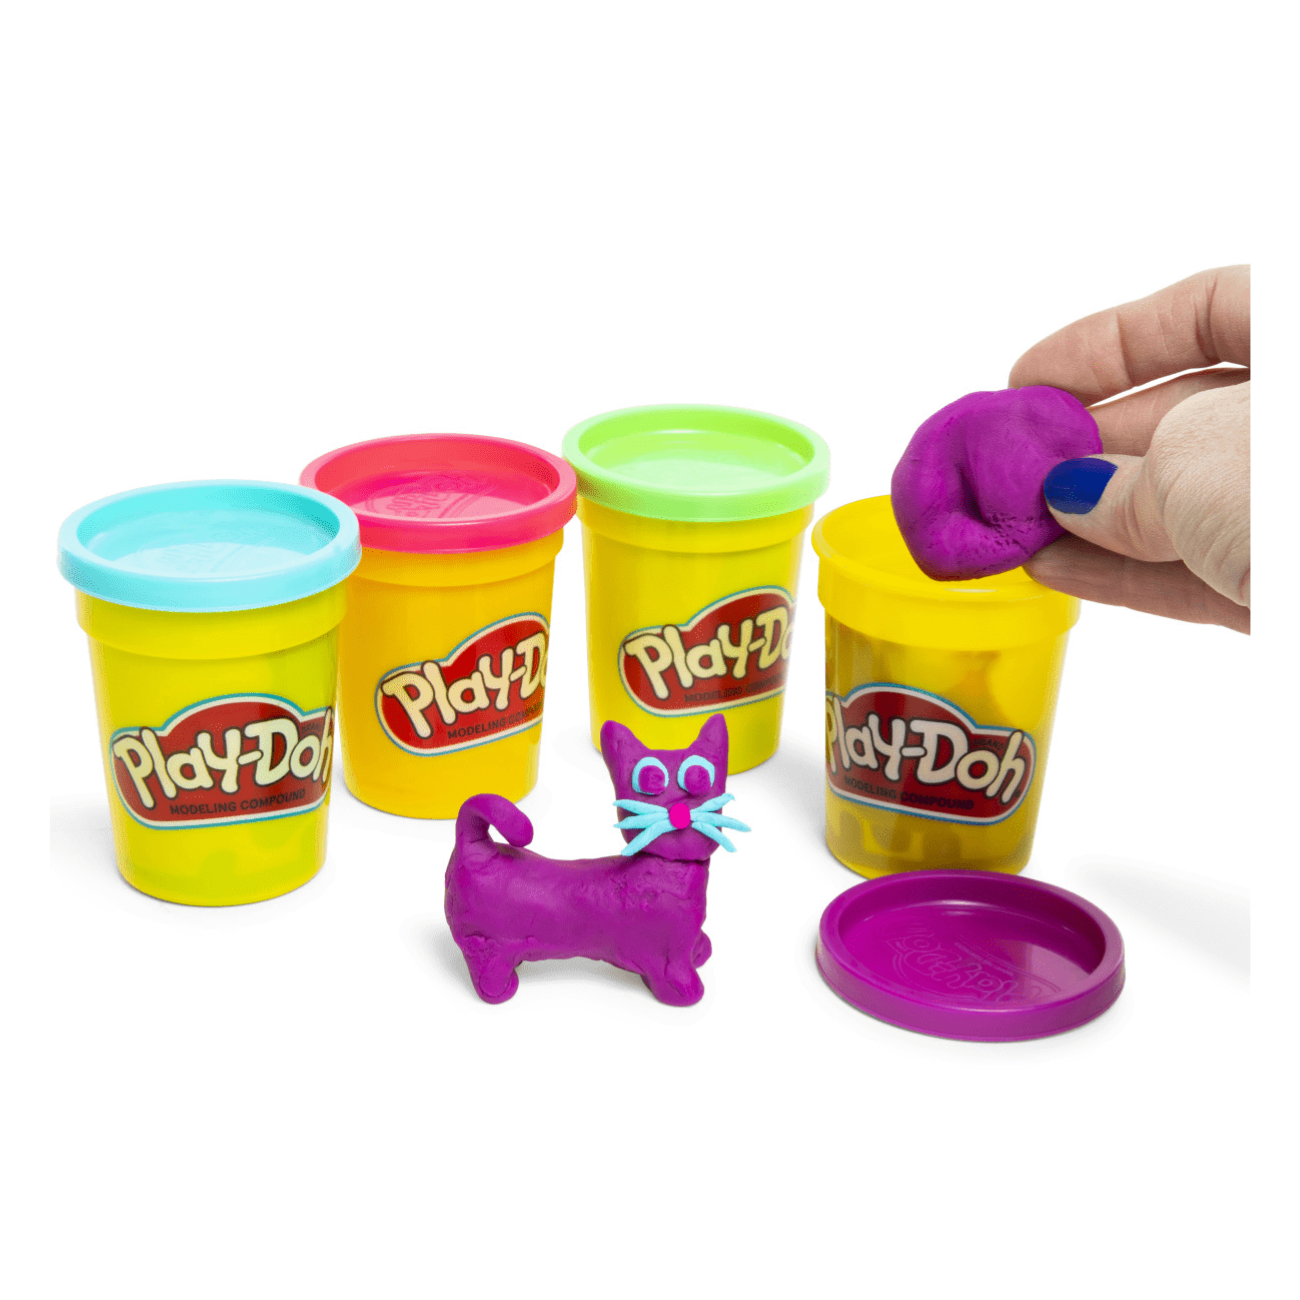 Play Doh 4 pack 4 oz - Fun Stuff Toys